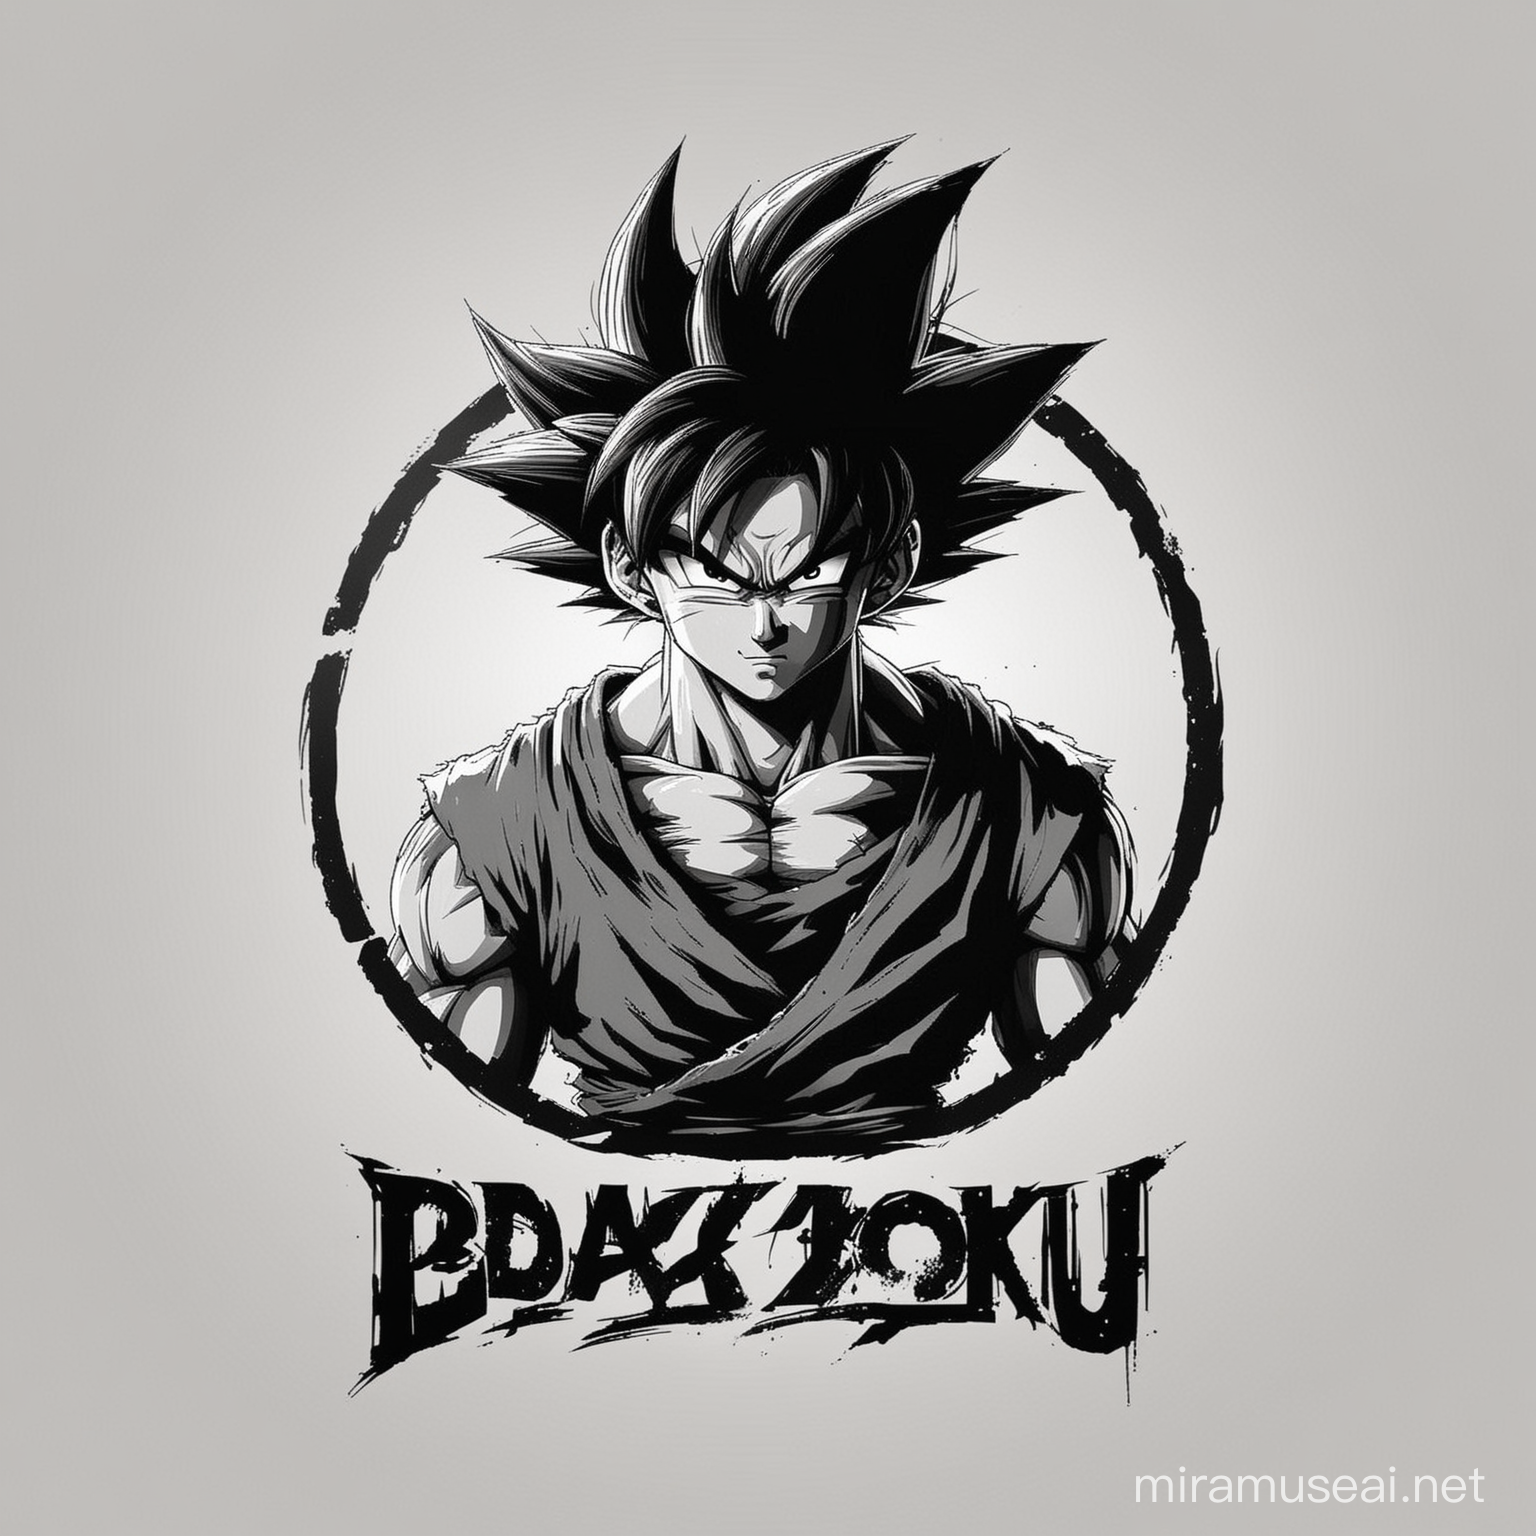 Black Goku Logo on White Background